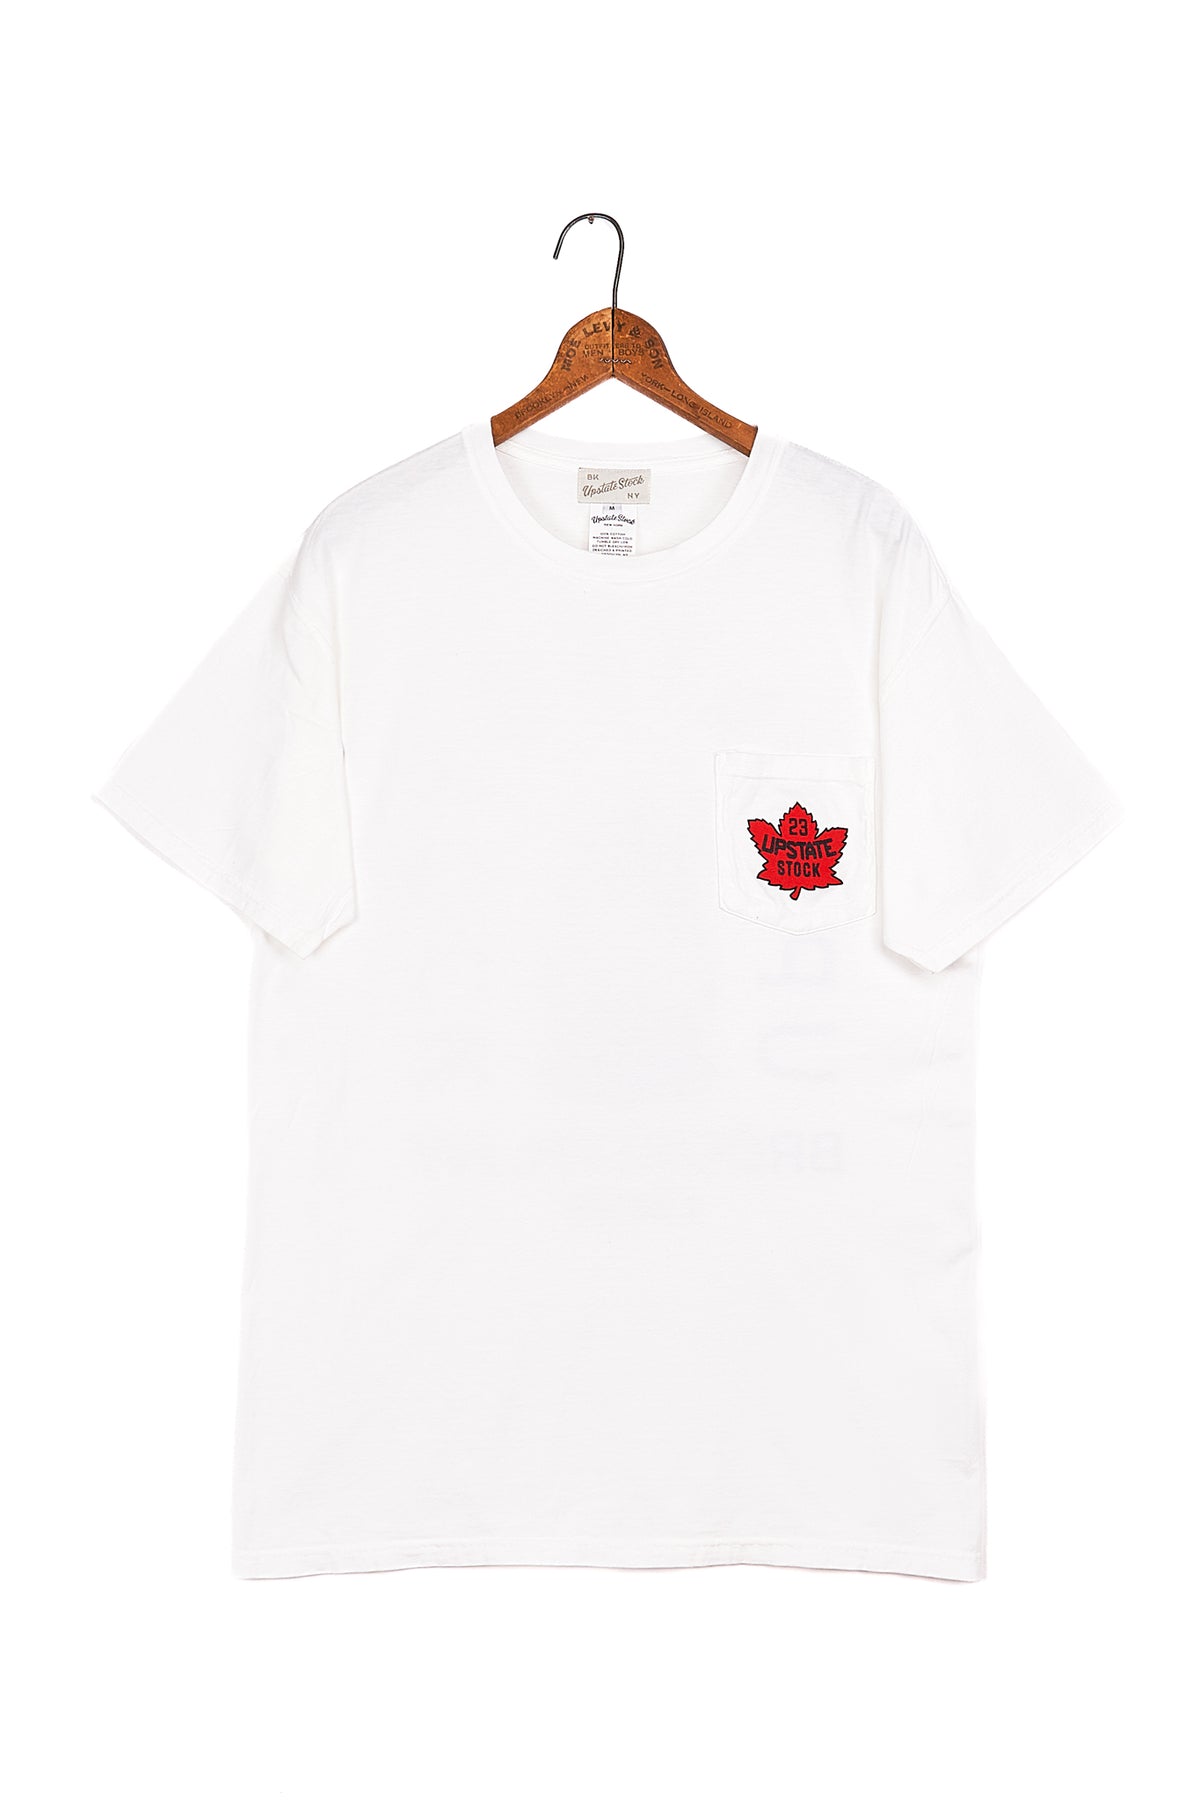 The American Cotton Pocket Tshirt - THE LANTERN